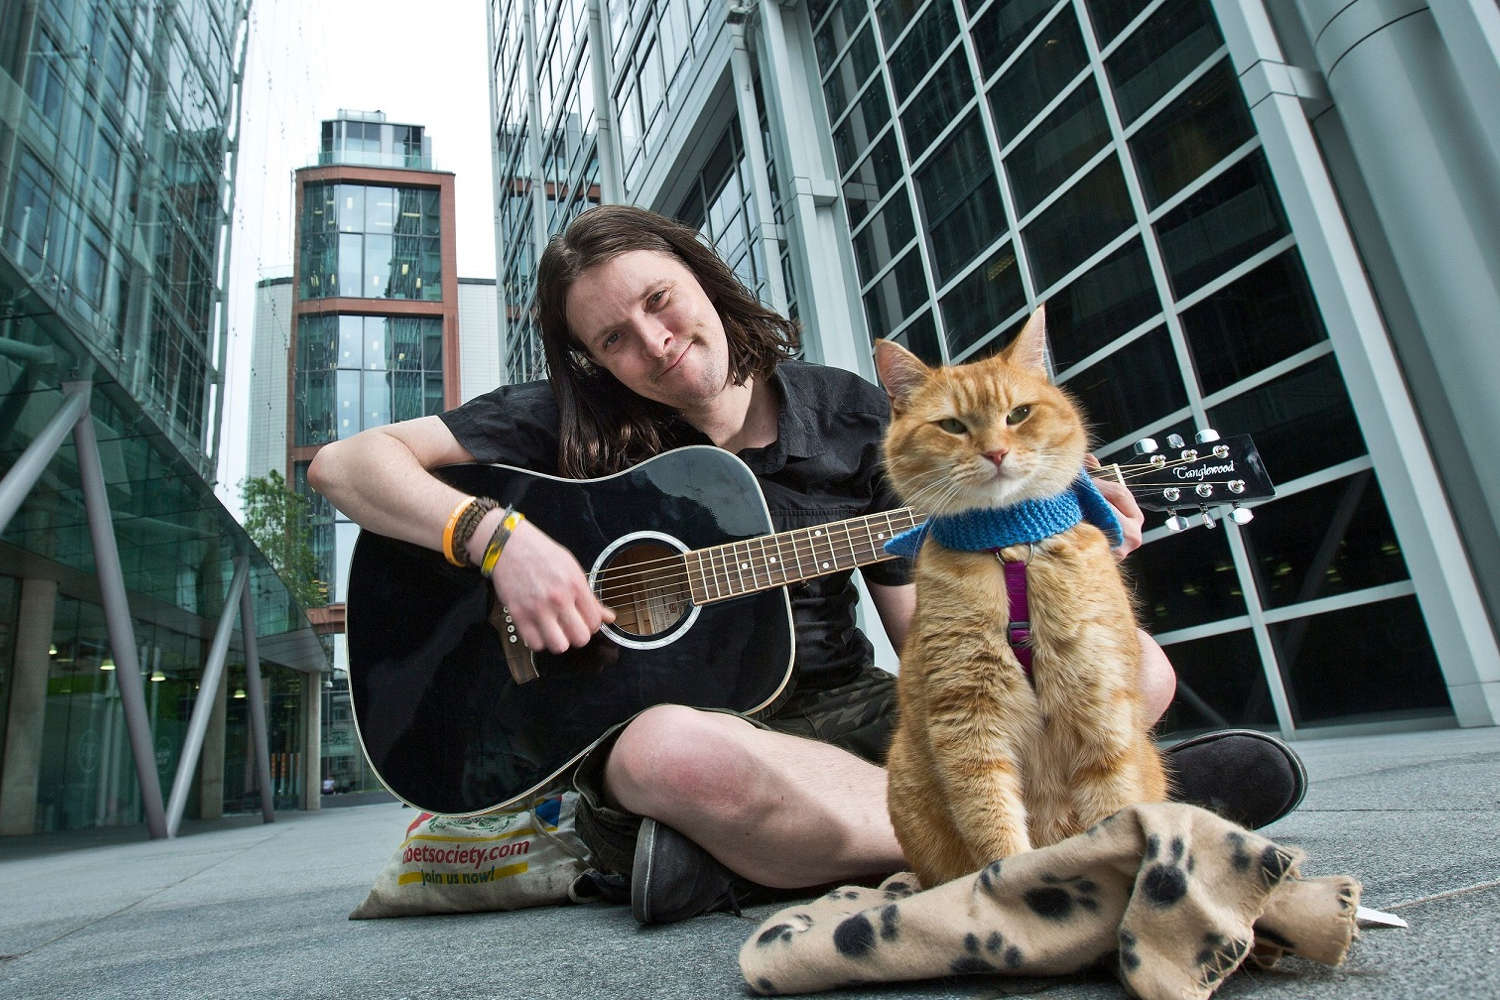 A Street Cat Named Bob (2016)